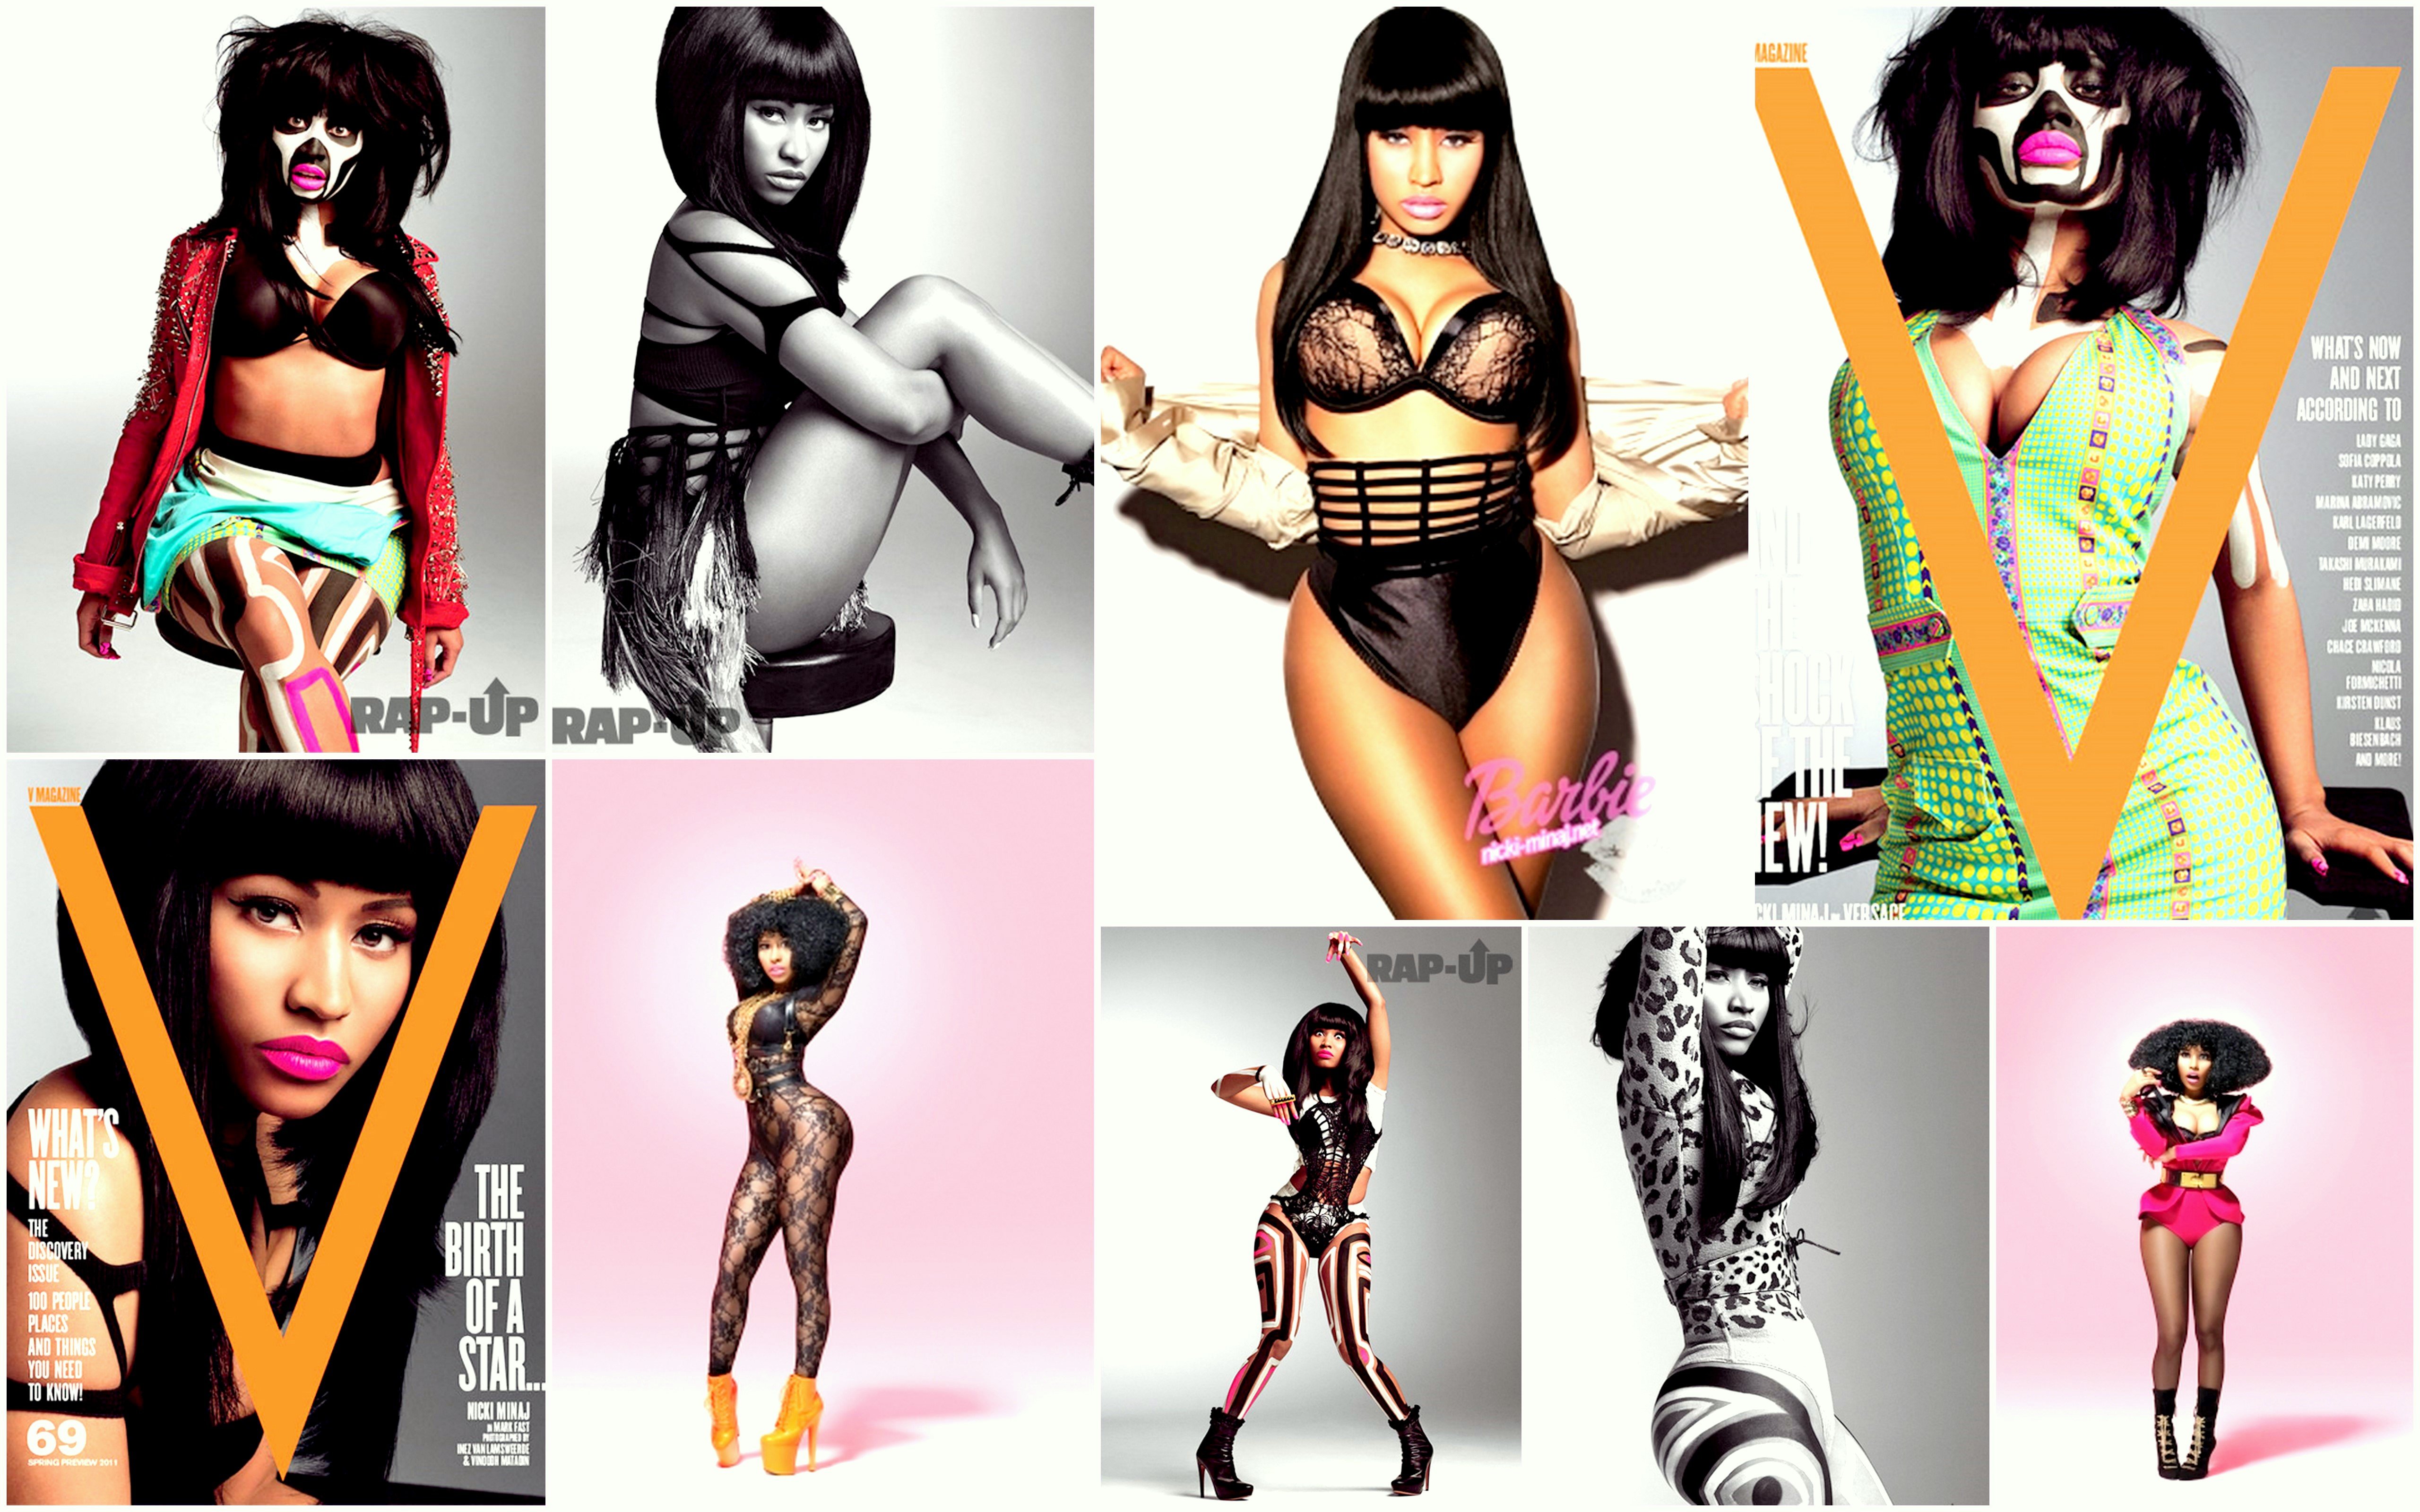 nicki, Minaj, Pop, R b, Hip, Hop, Rap, Rapper, Singer, Actress, Glam, Sexy,...